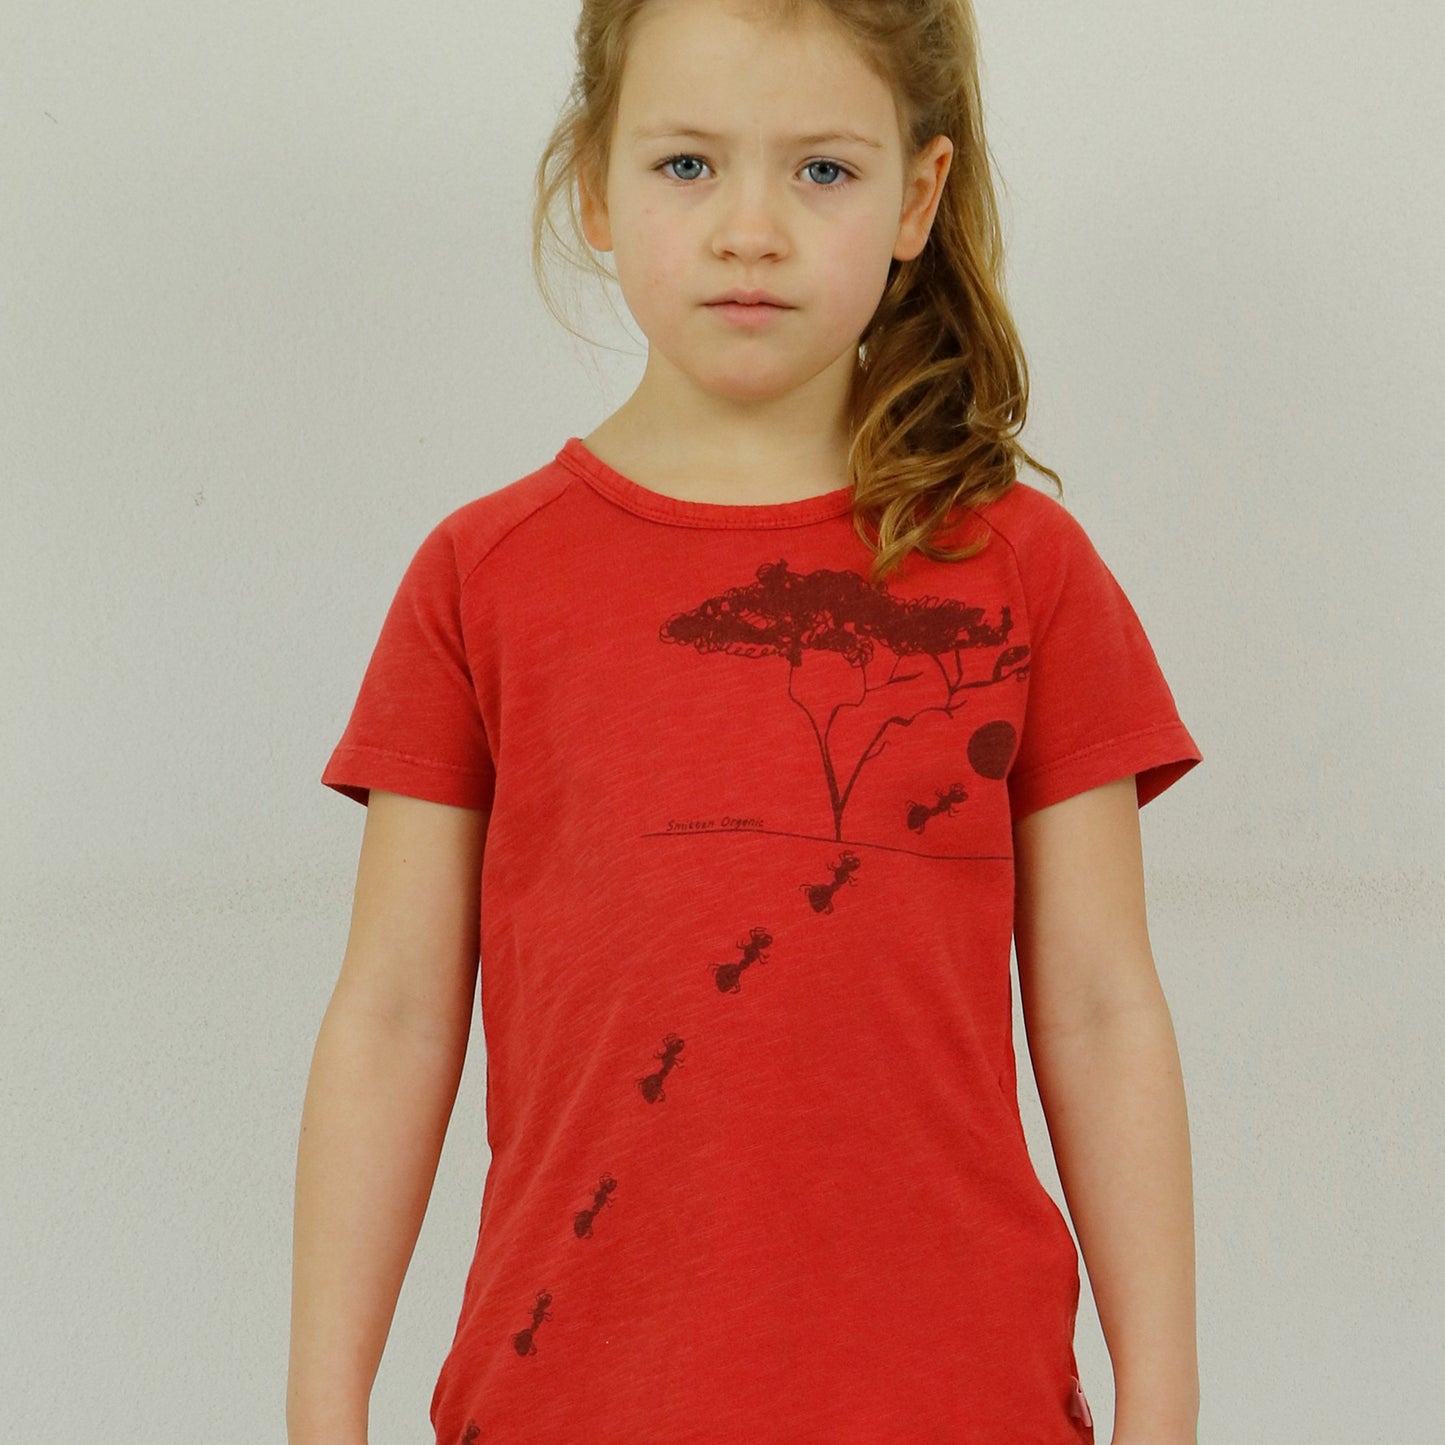 Akazienbaum im Safari-Kurzarm gebackenes rotes T-Shirt